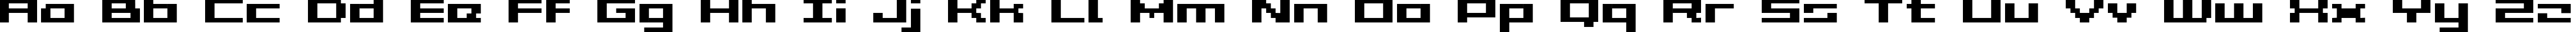 Пример написания английского алфавита шрифтом Grixel Acme 5 Wide Bold